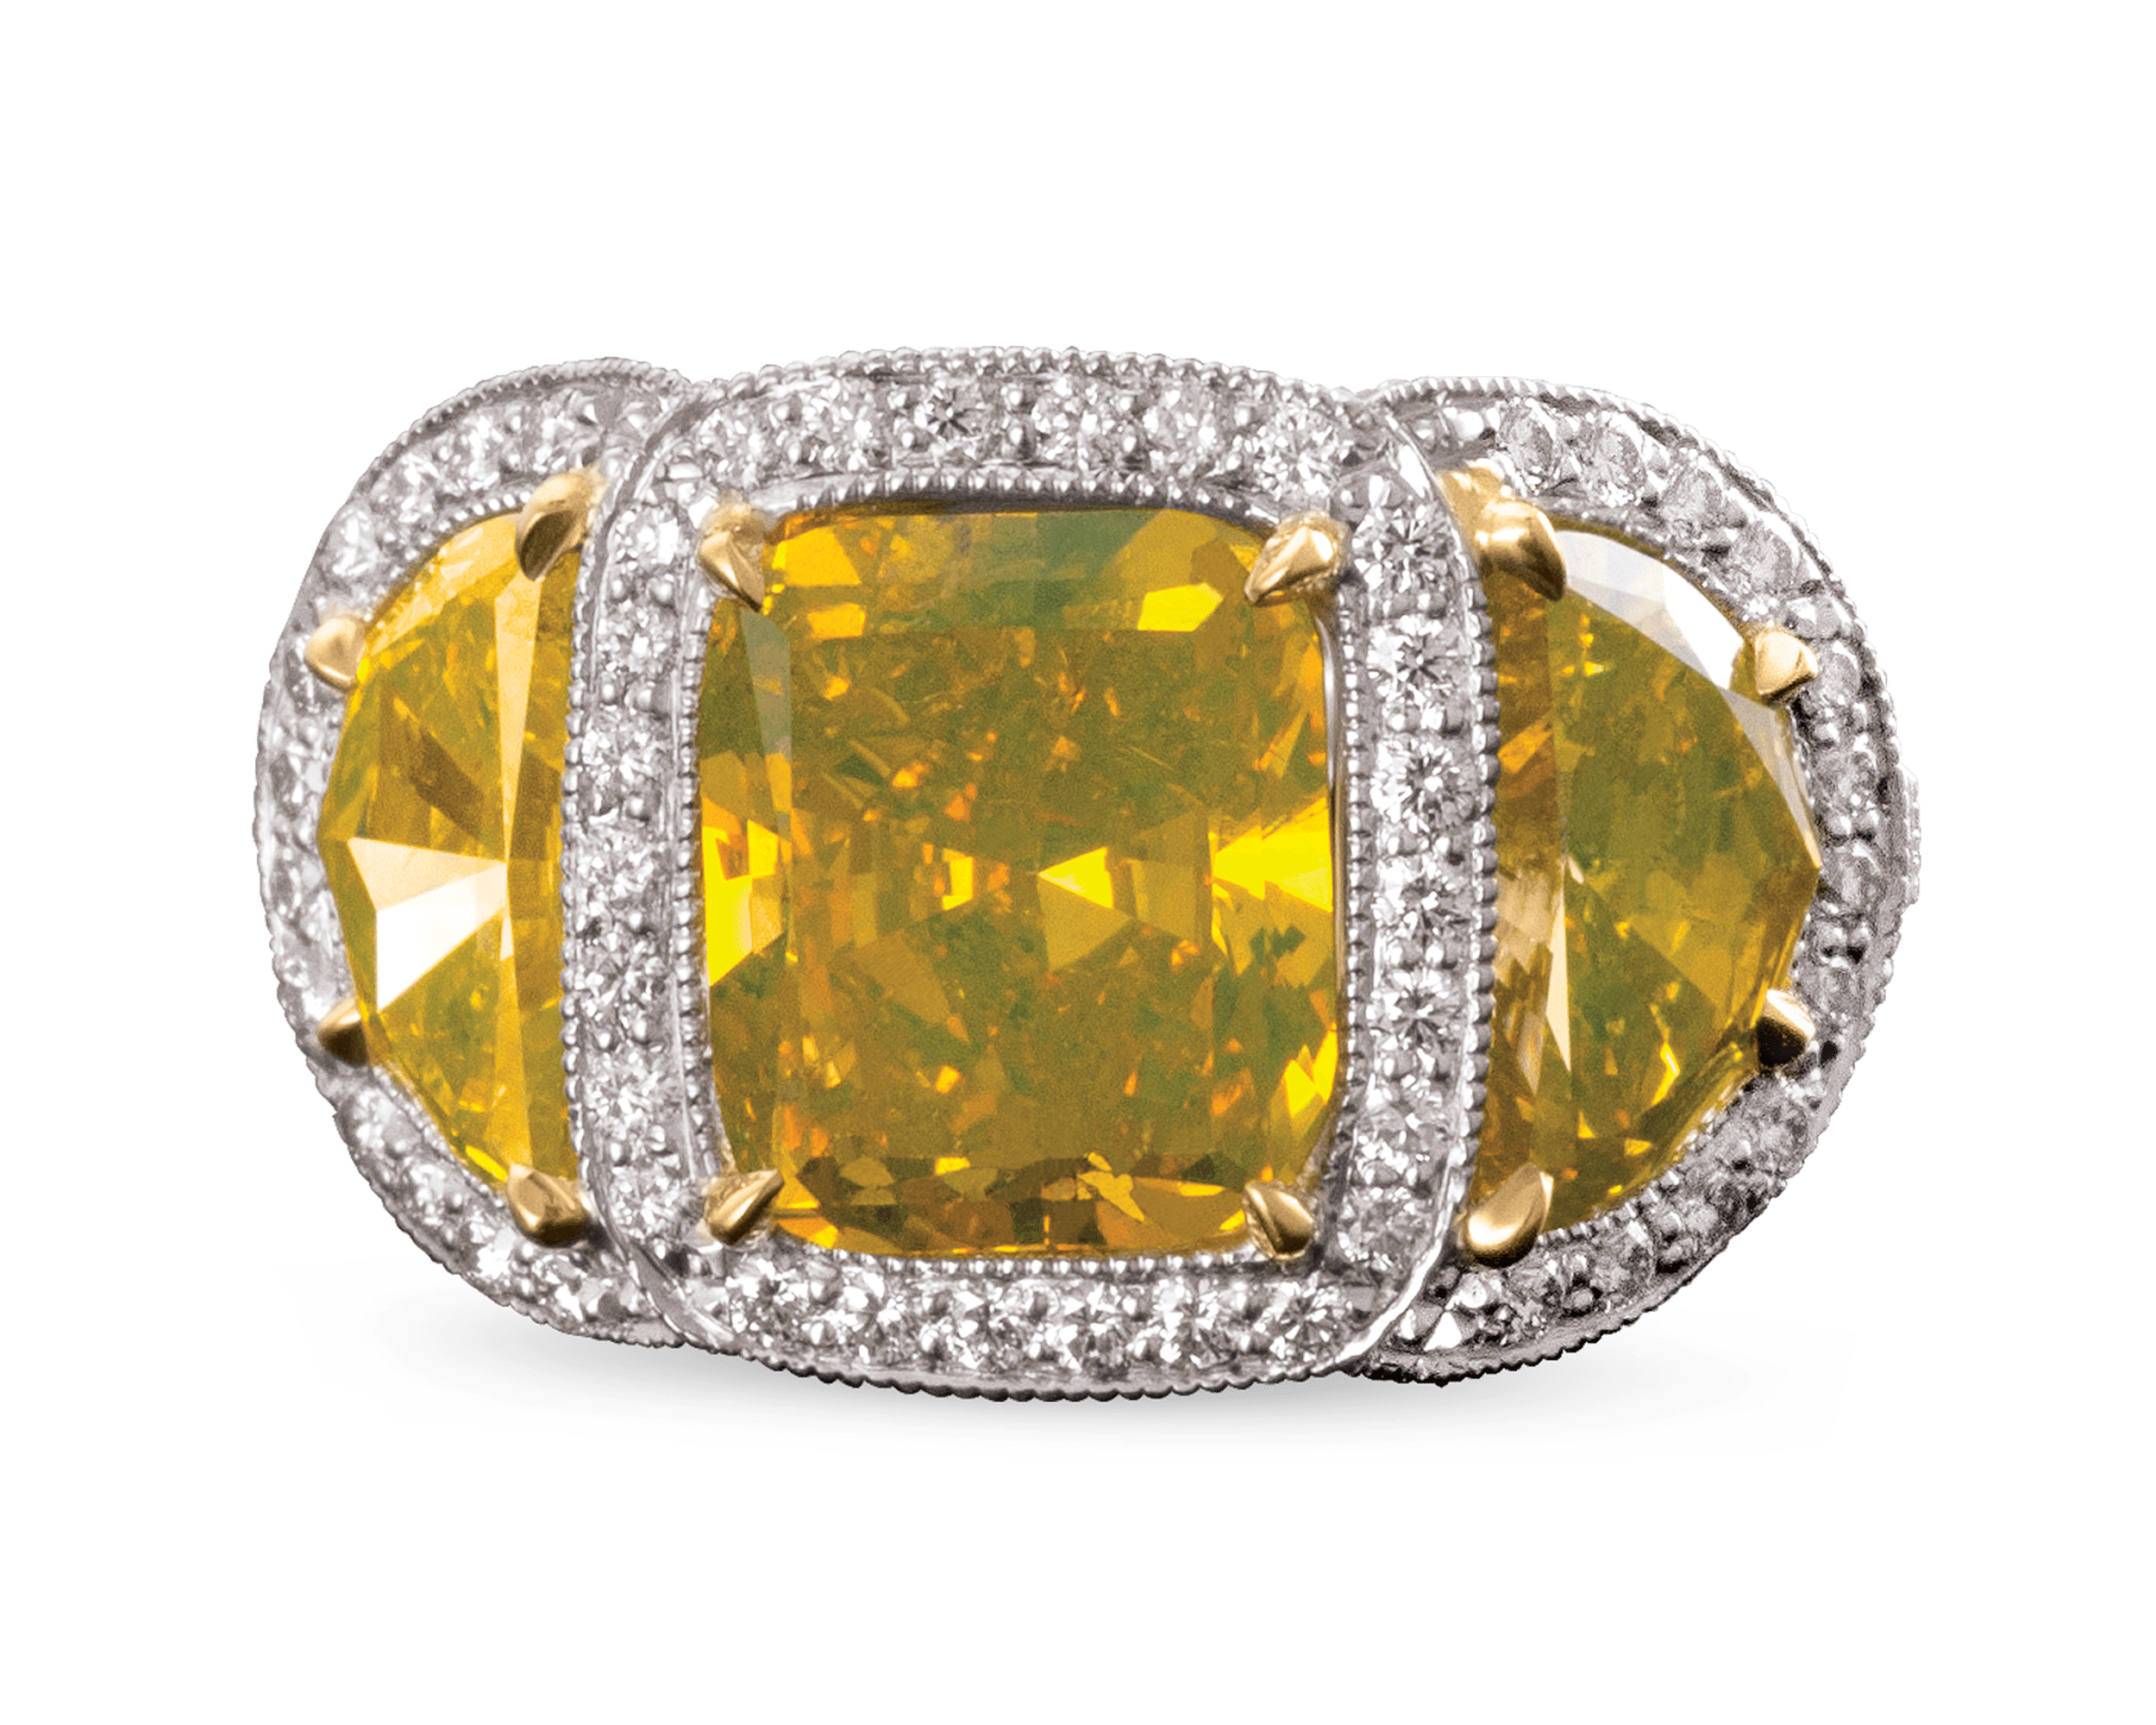 Fancy Intense Greenish-Yellow Diamond Ring, 6.16 Carats